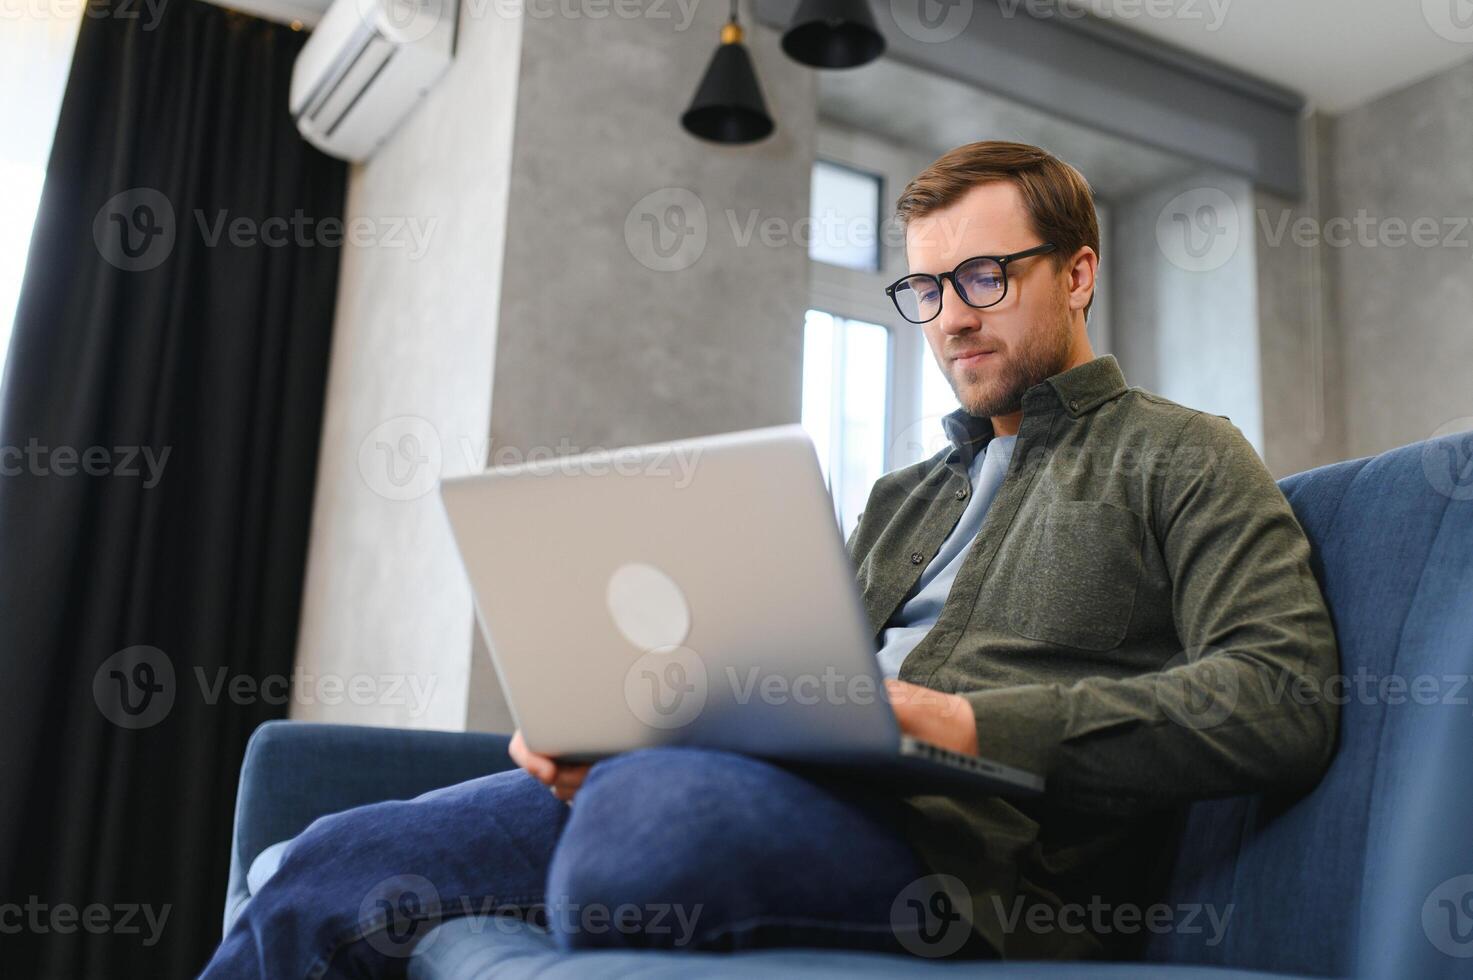 hombres trabajando en ordenador portátil computadora en su habitación. hogar trabajo o estudiar, Lanza libre concepto. joven hombre sentado relajado en sofá con ordenador portátil. moderno empresario utilizando ordenador portátil. foto